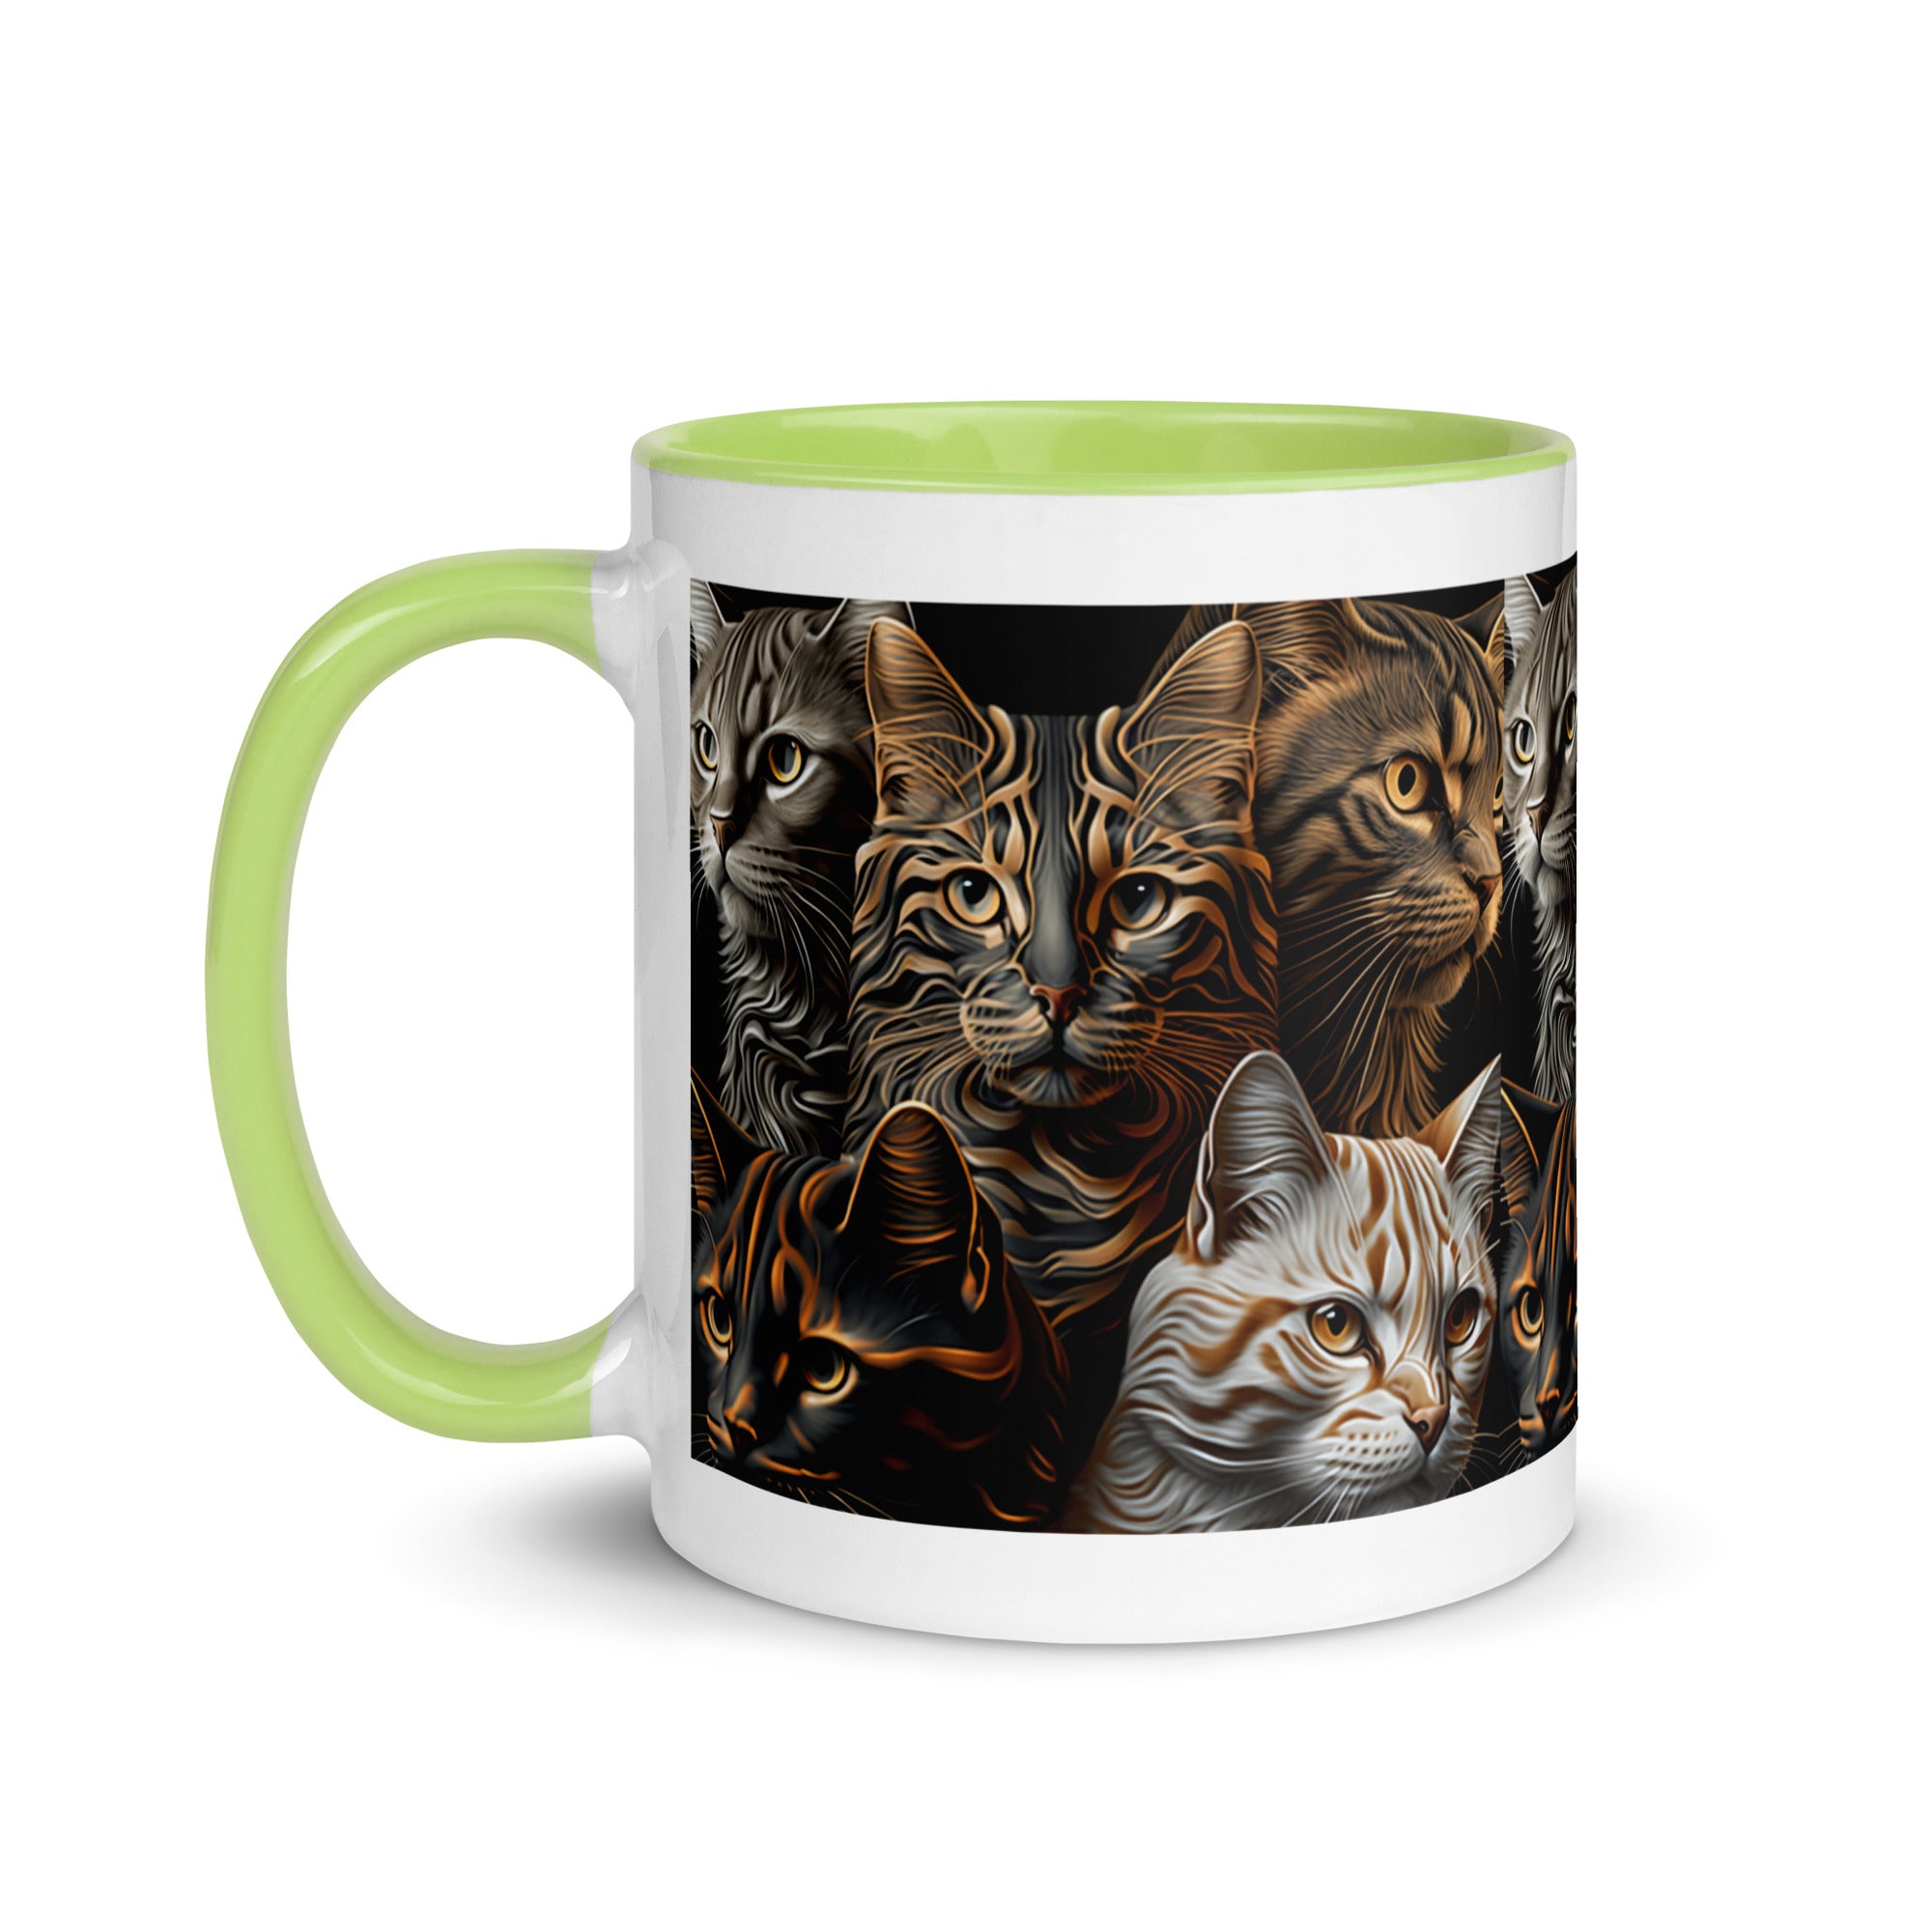 Mug with Color Inside, Cute Cat Cup, Coffee Mug, Tea, Gift